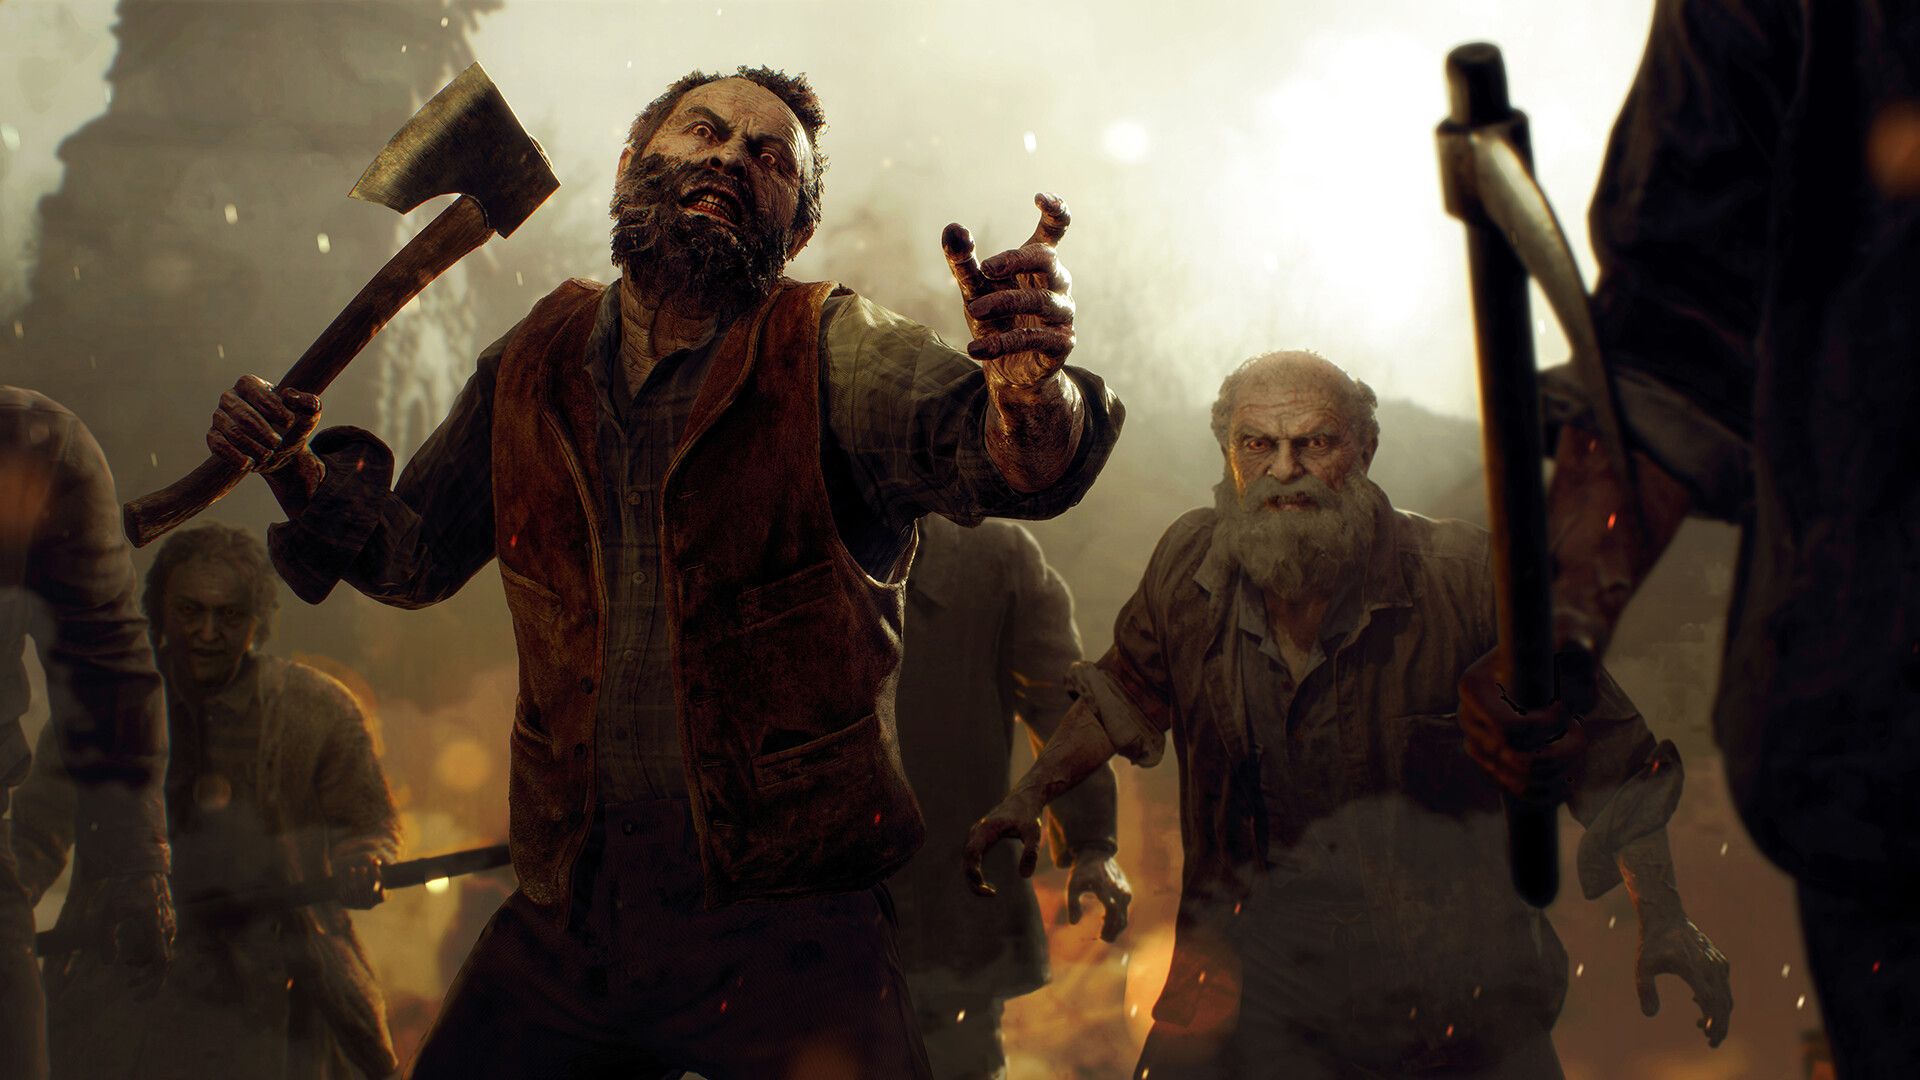 Video game screenshot of a zombified man wielding an axe